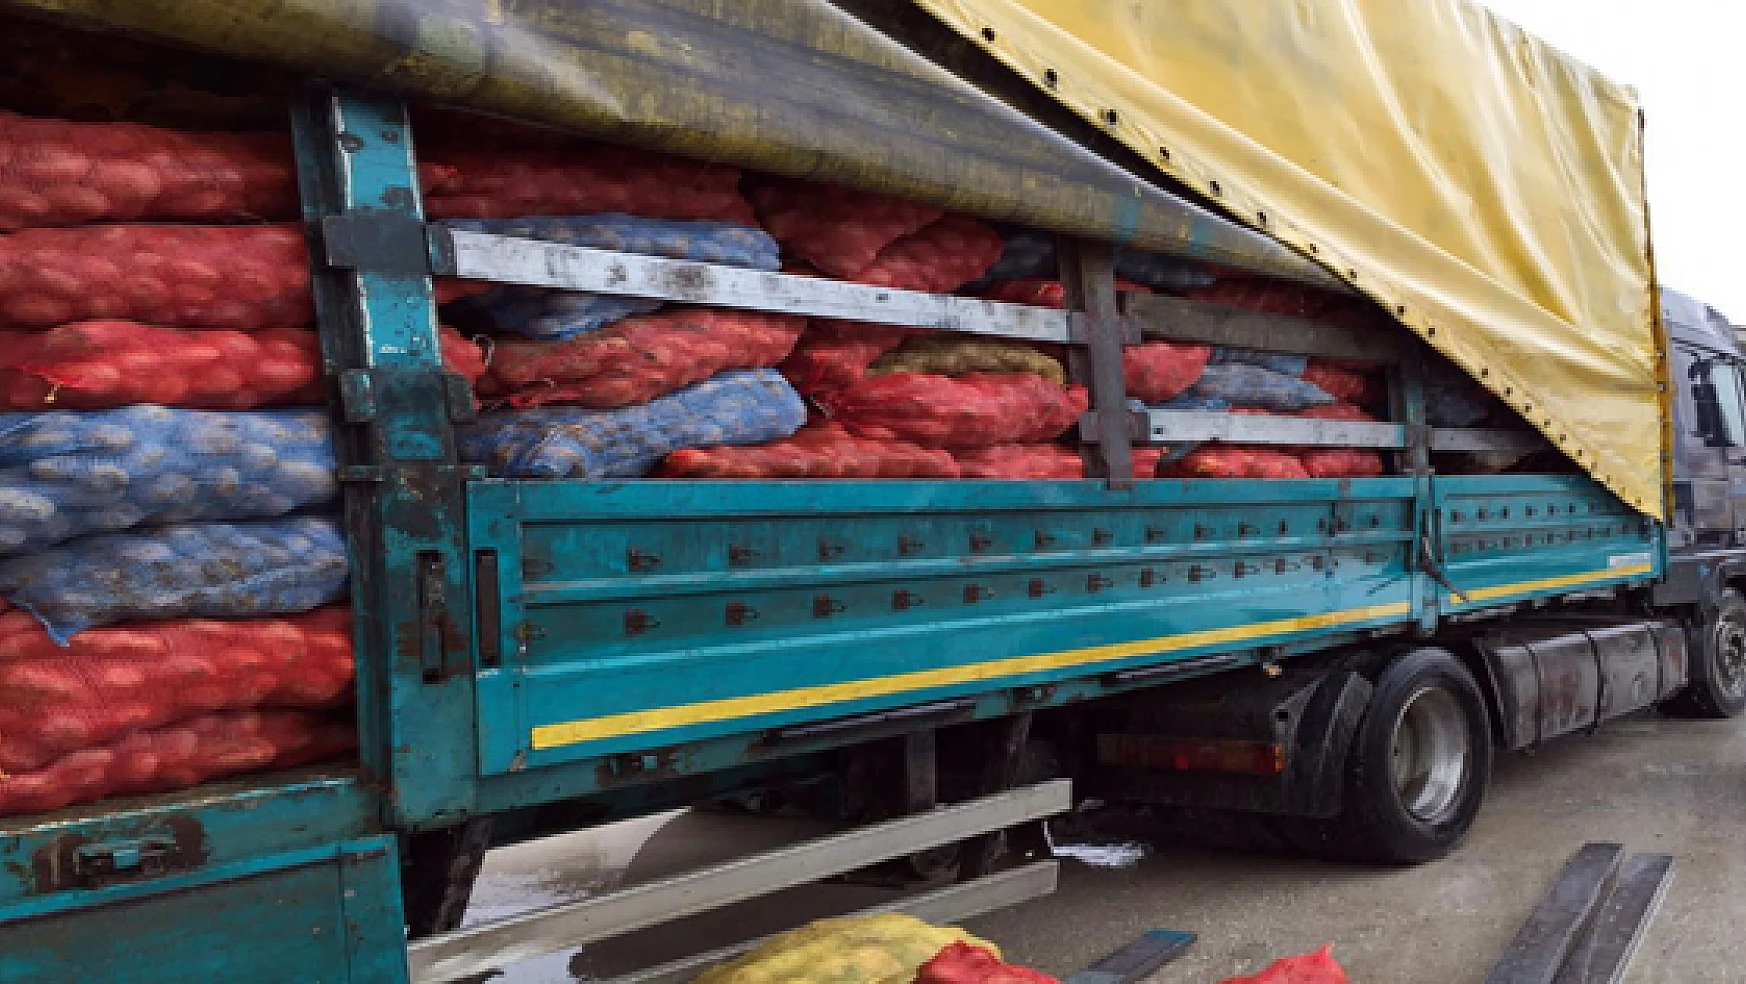 Patates yüklü kamyonla sigara kaçakçılığı